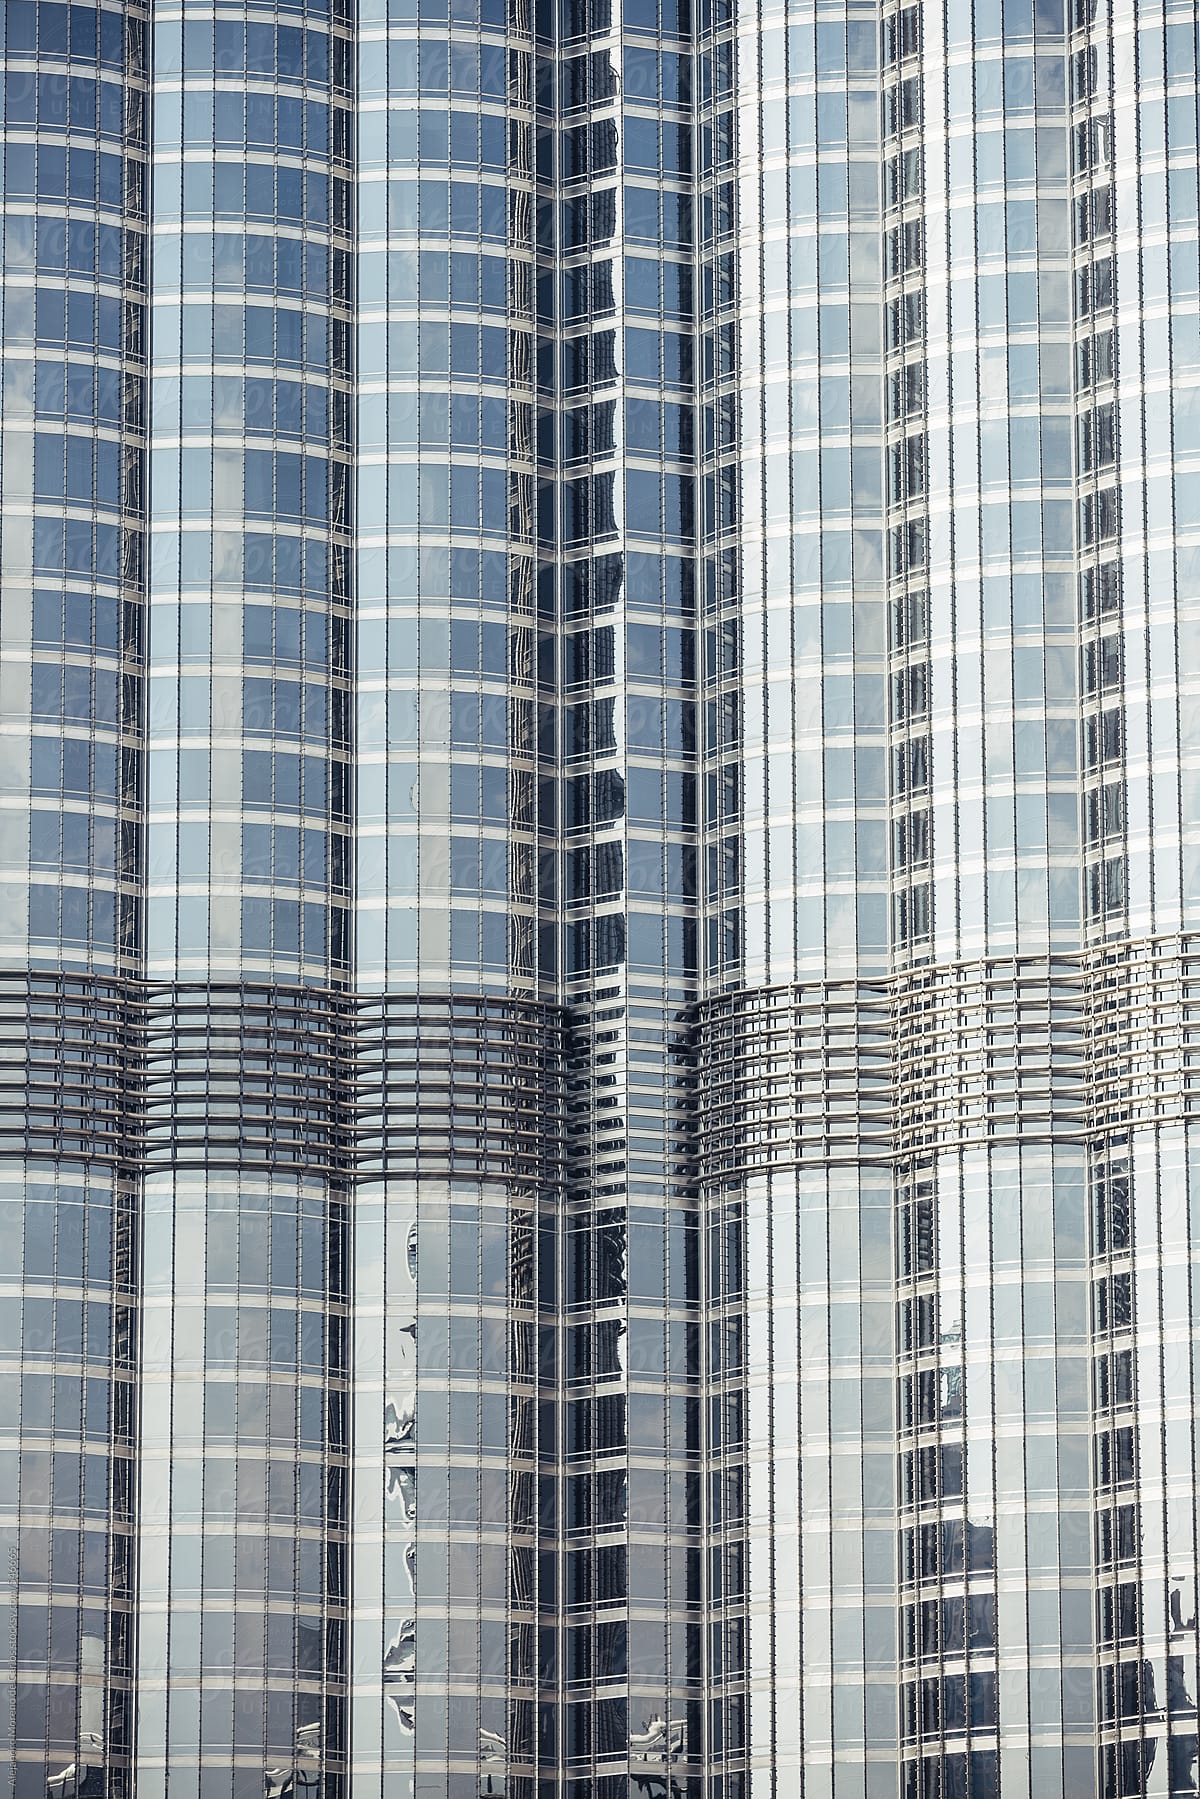 City pattern - Modern building texture. Dubai, United Arab Emirates